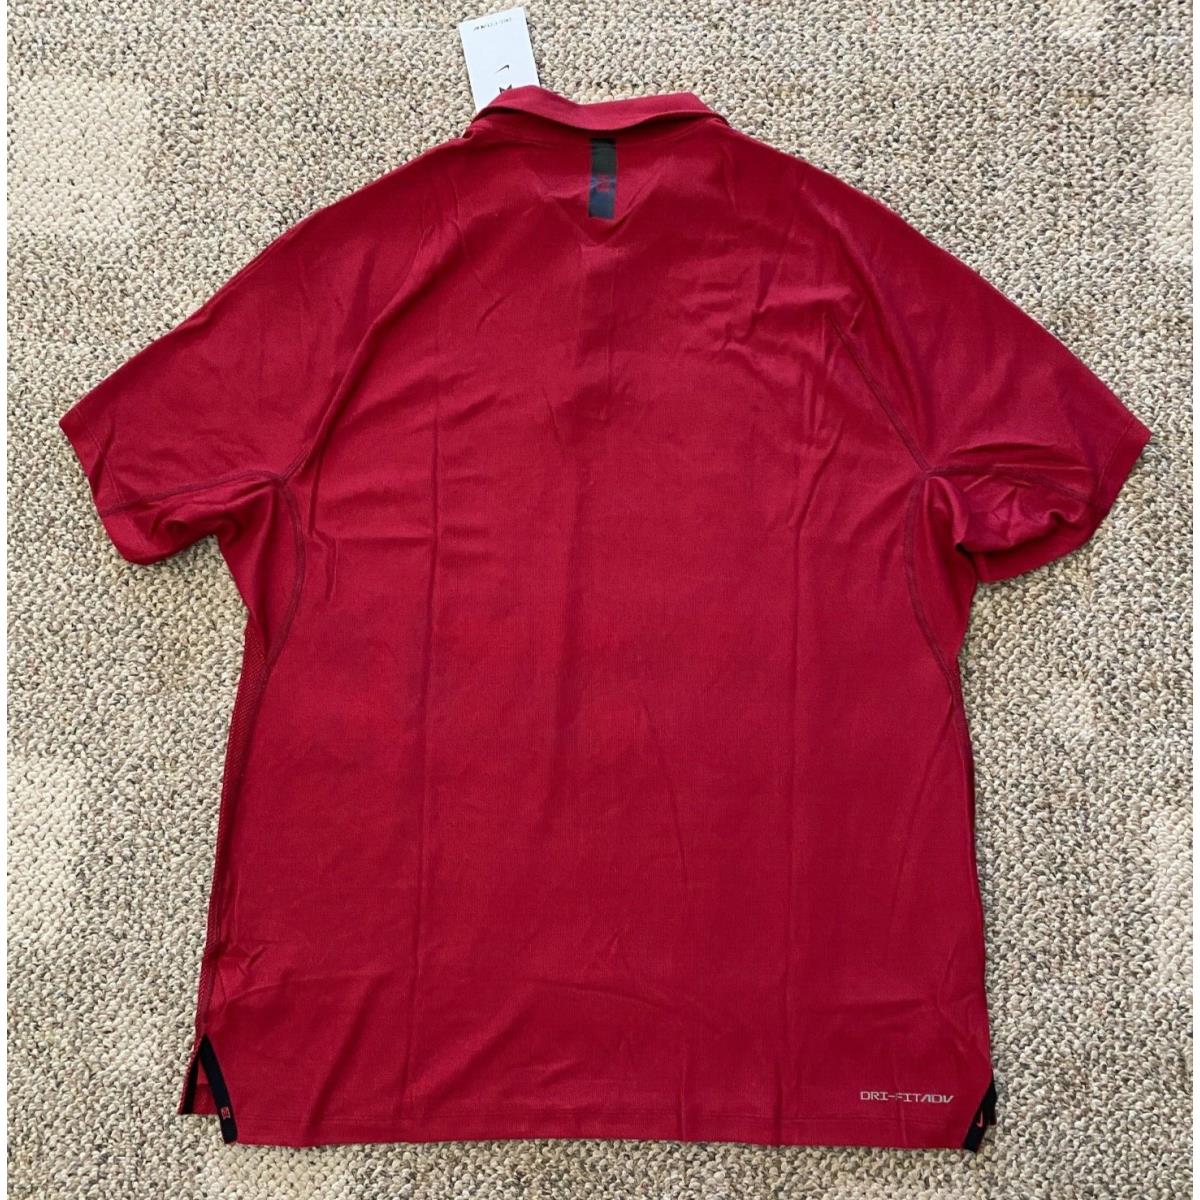 Men`s Size Large Nike Dri-fit Adv Tiger Woods Golf Polo Shirt Red DA2995-687